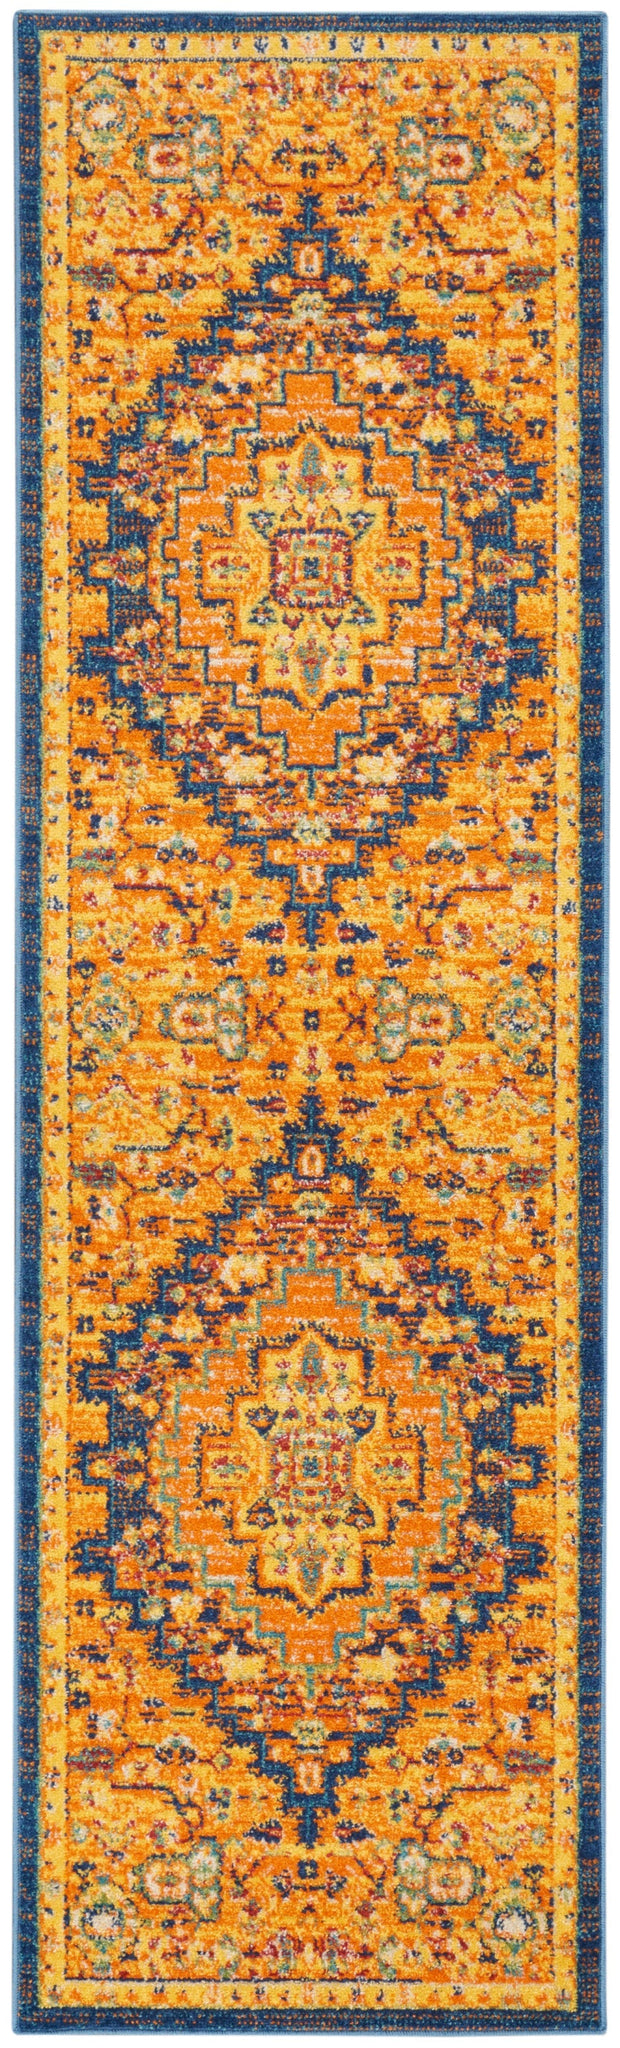 allur orange multicolor rug by nourison 99446838209 redo 2